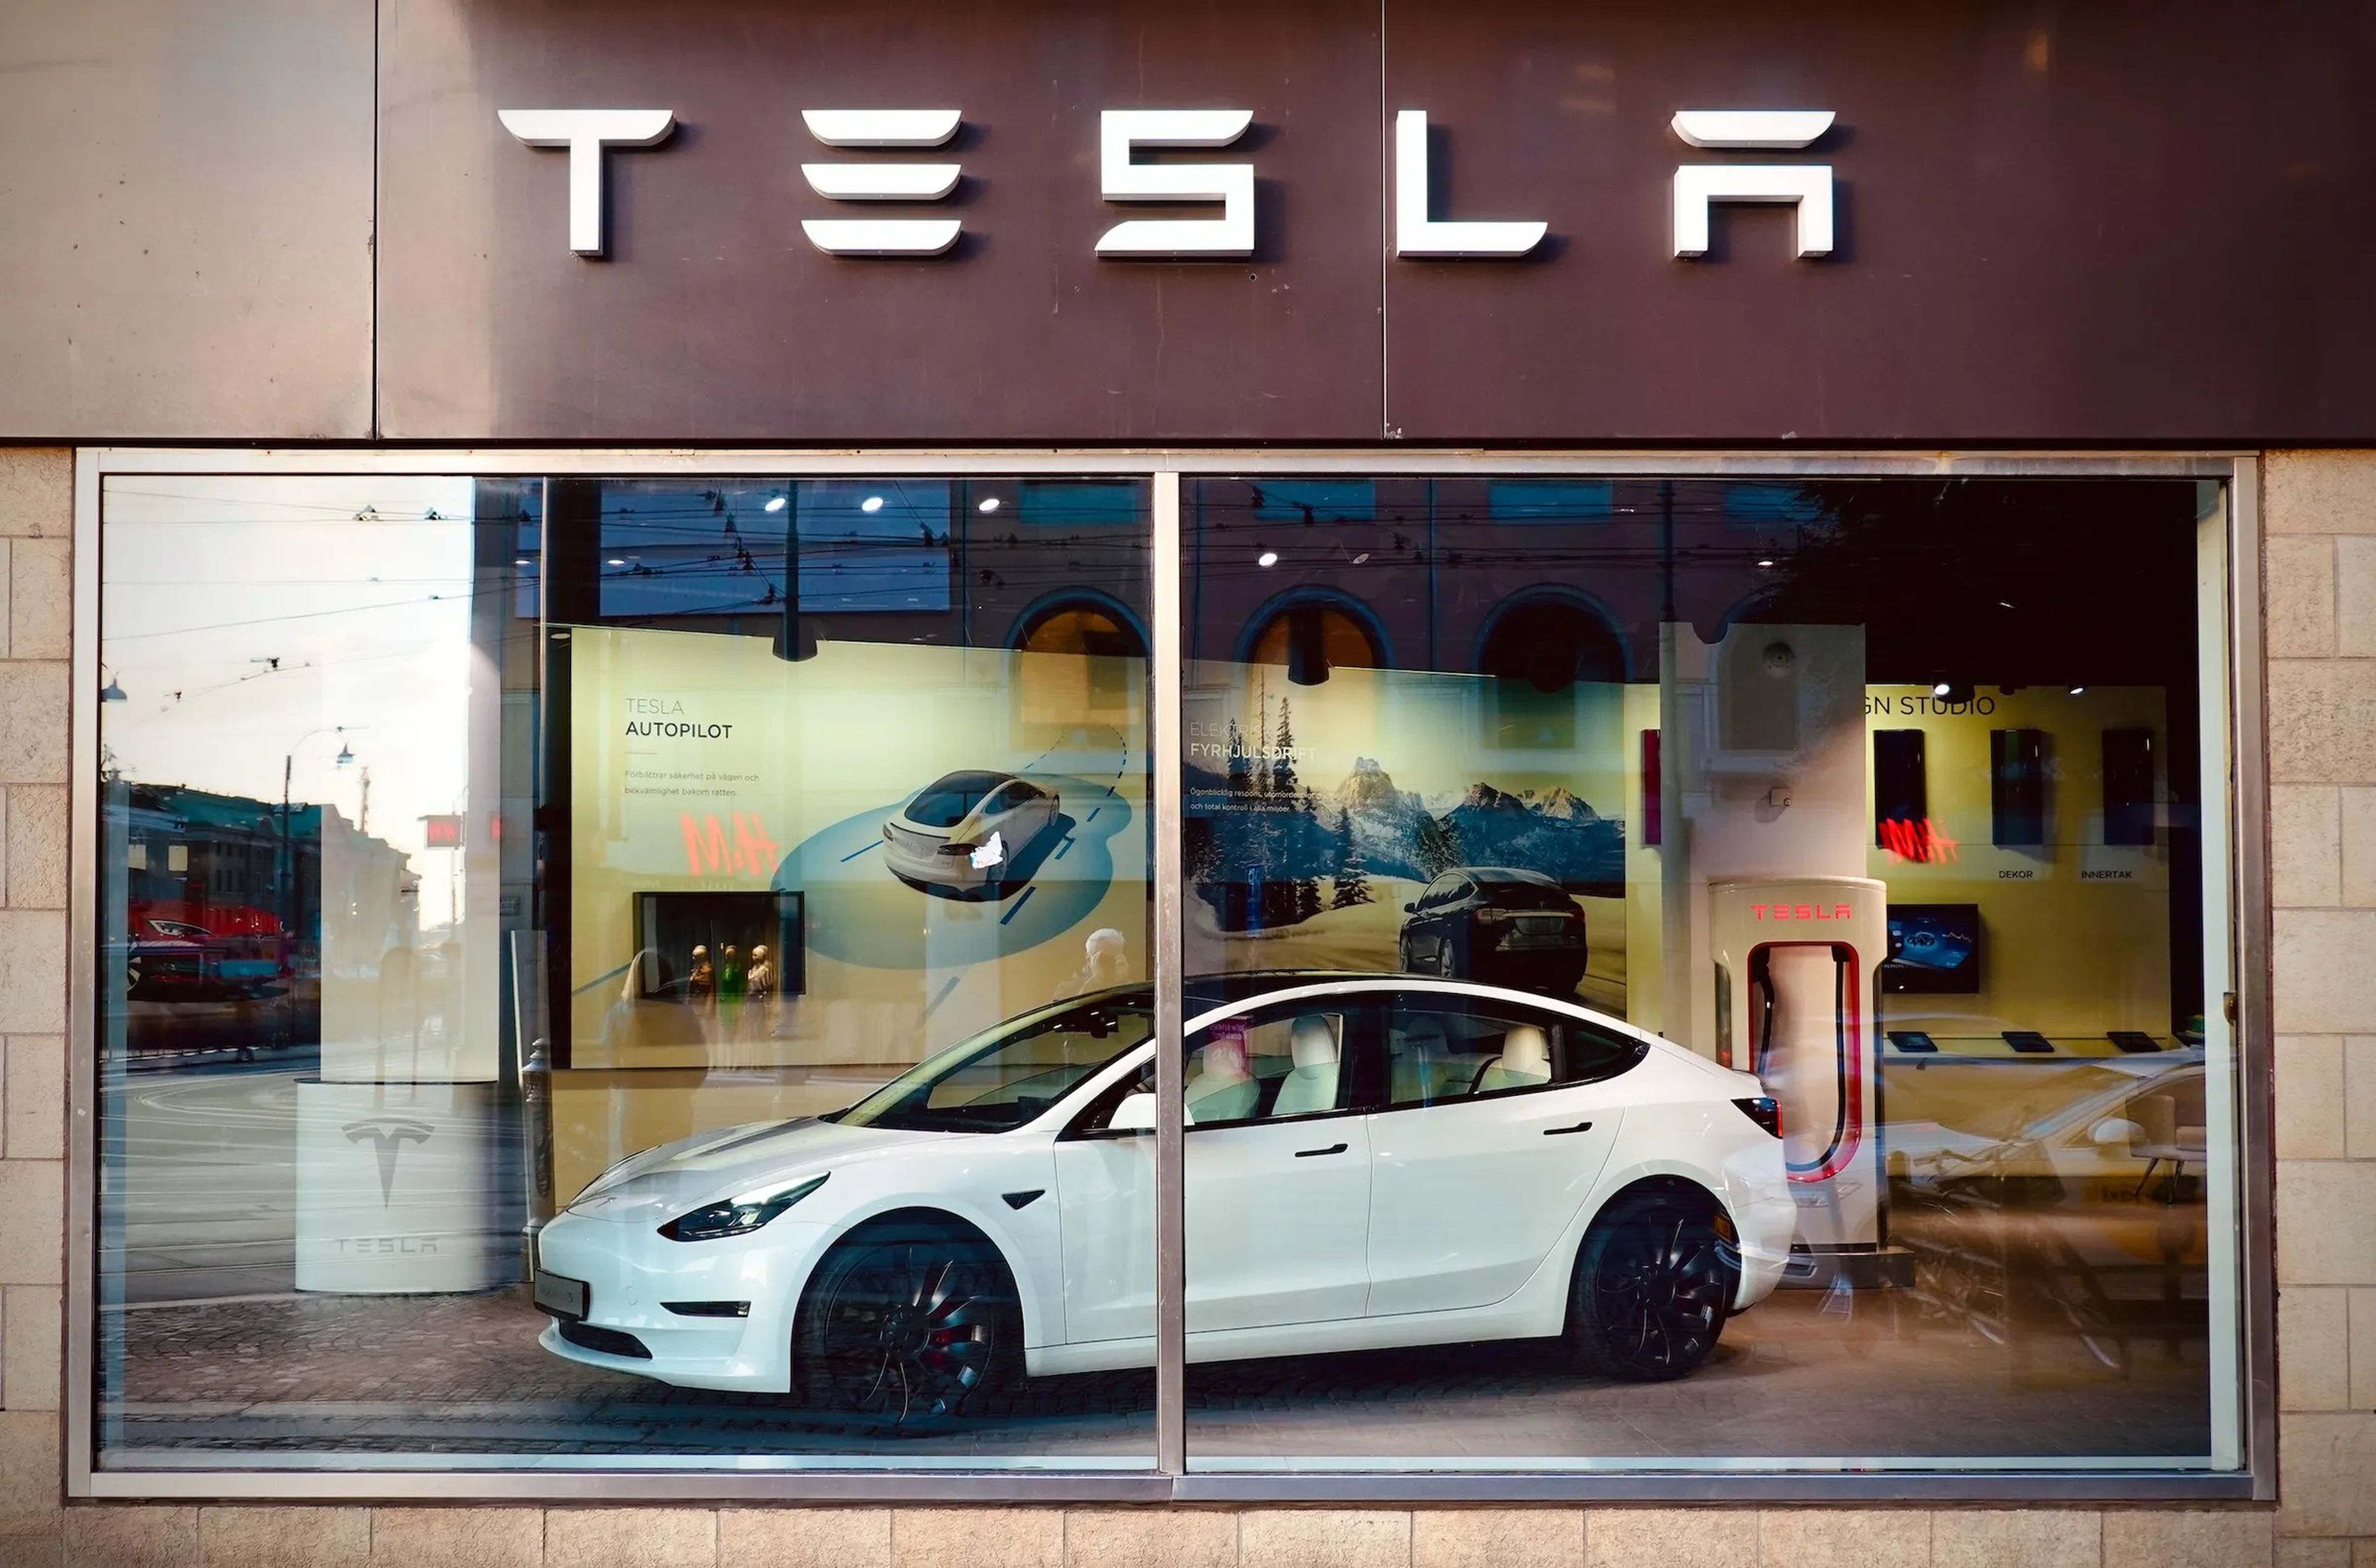 Sweden, Göteborg: A Tesla S car sits in the window of the Tesla Motors automotive store downtown